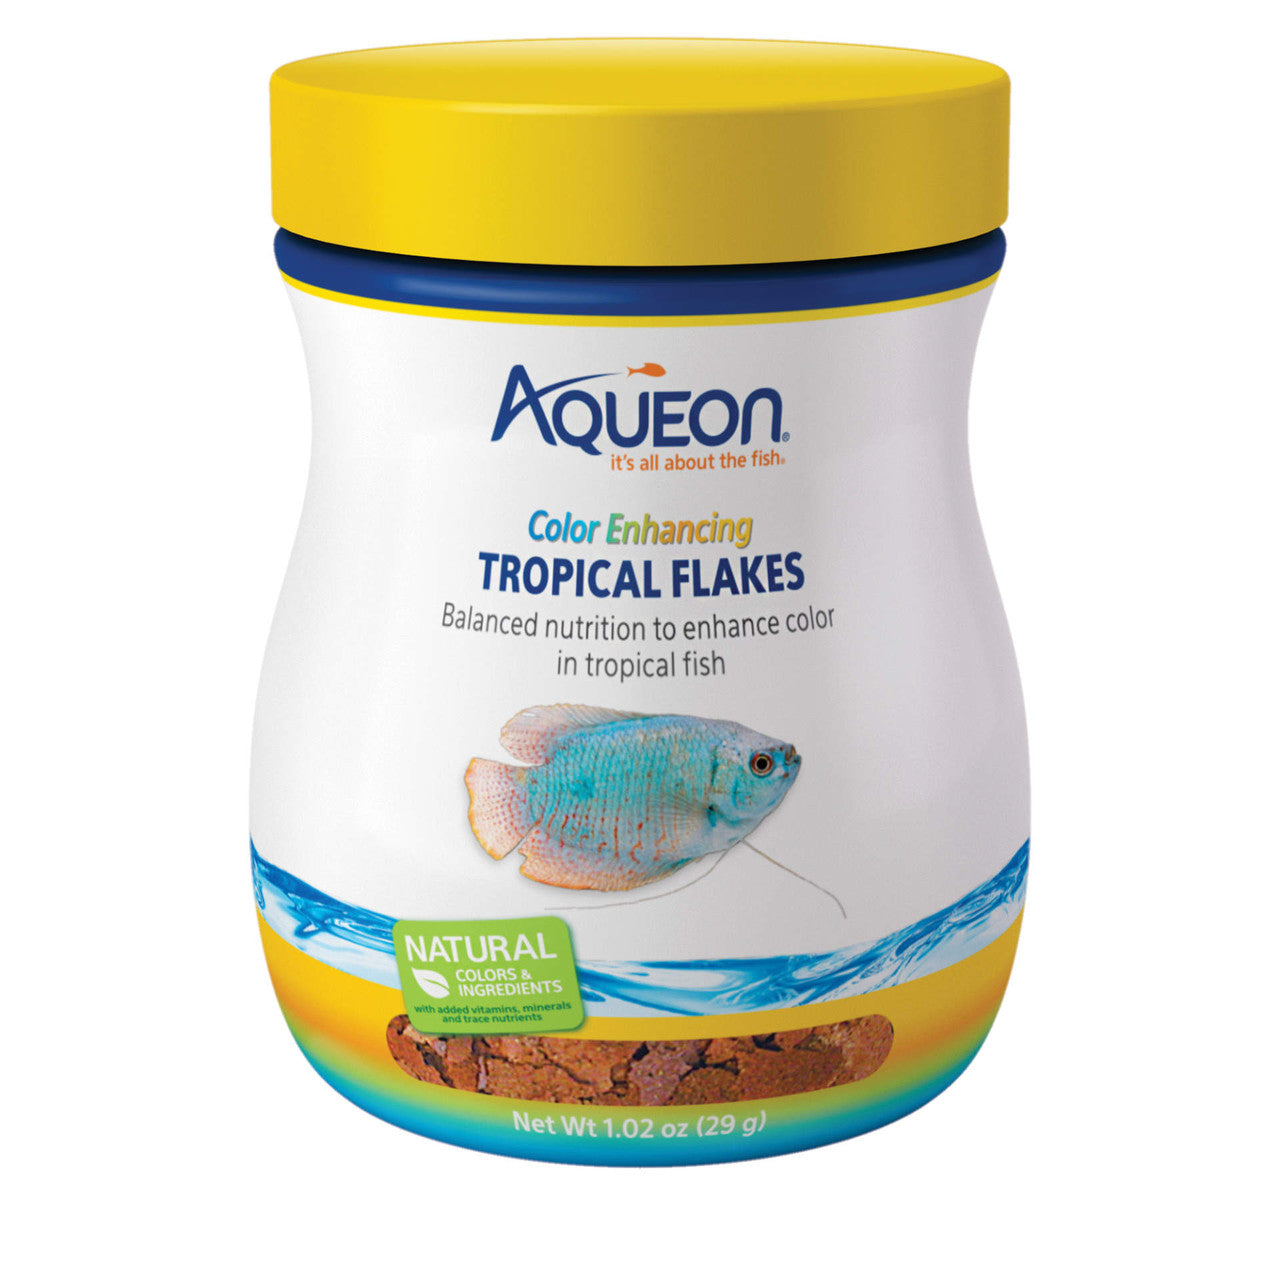 Aqueon Tropical Flakes Color Enhancing 1.02 Ounces Color